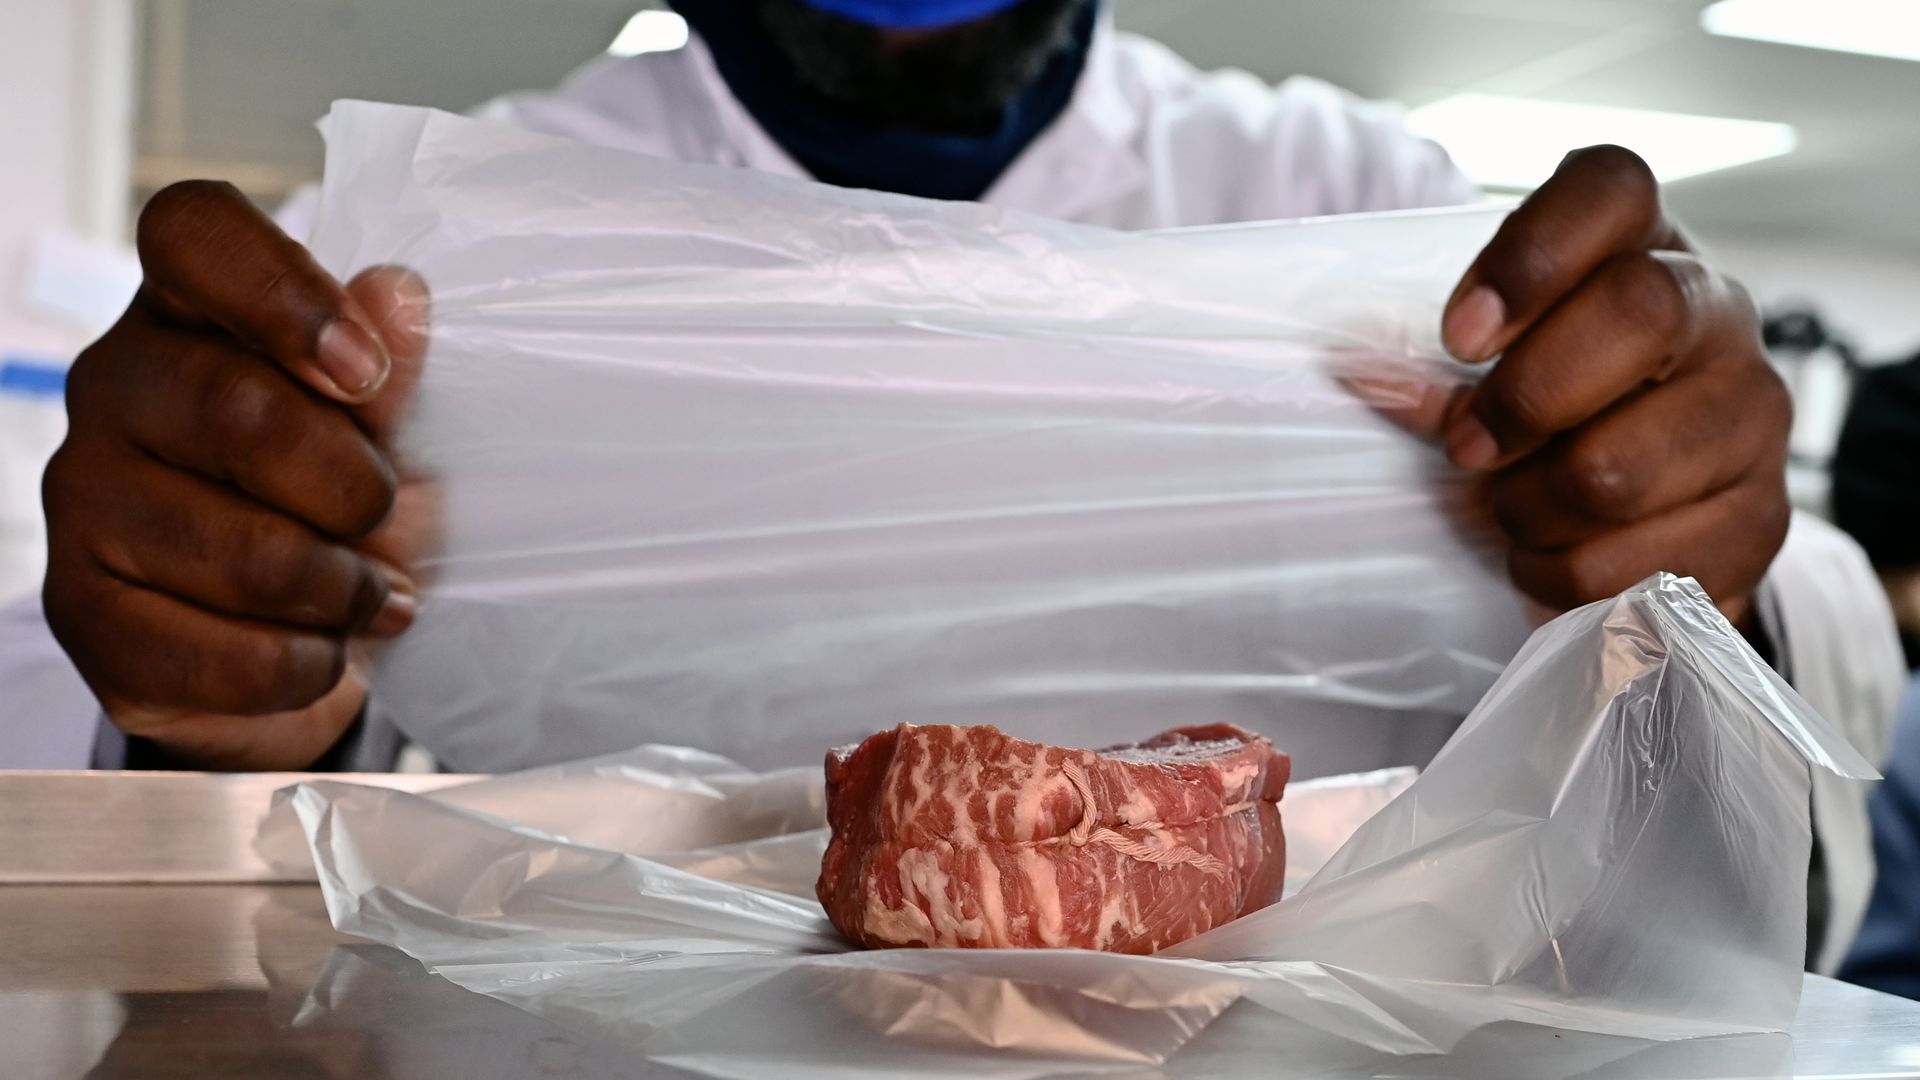 A butcher wraps up a steak